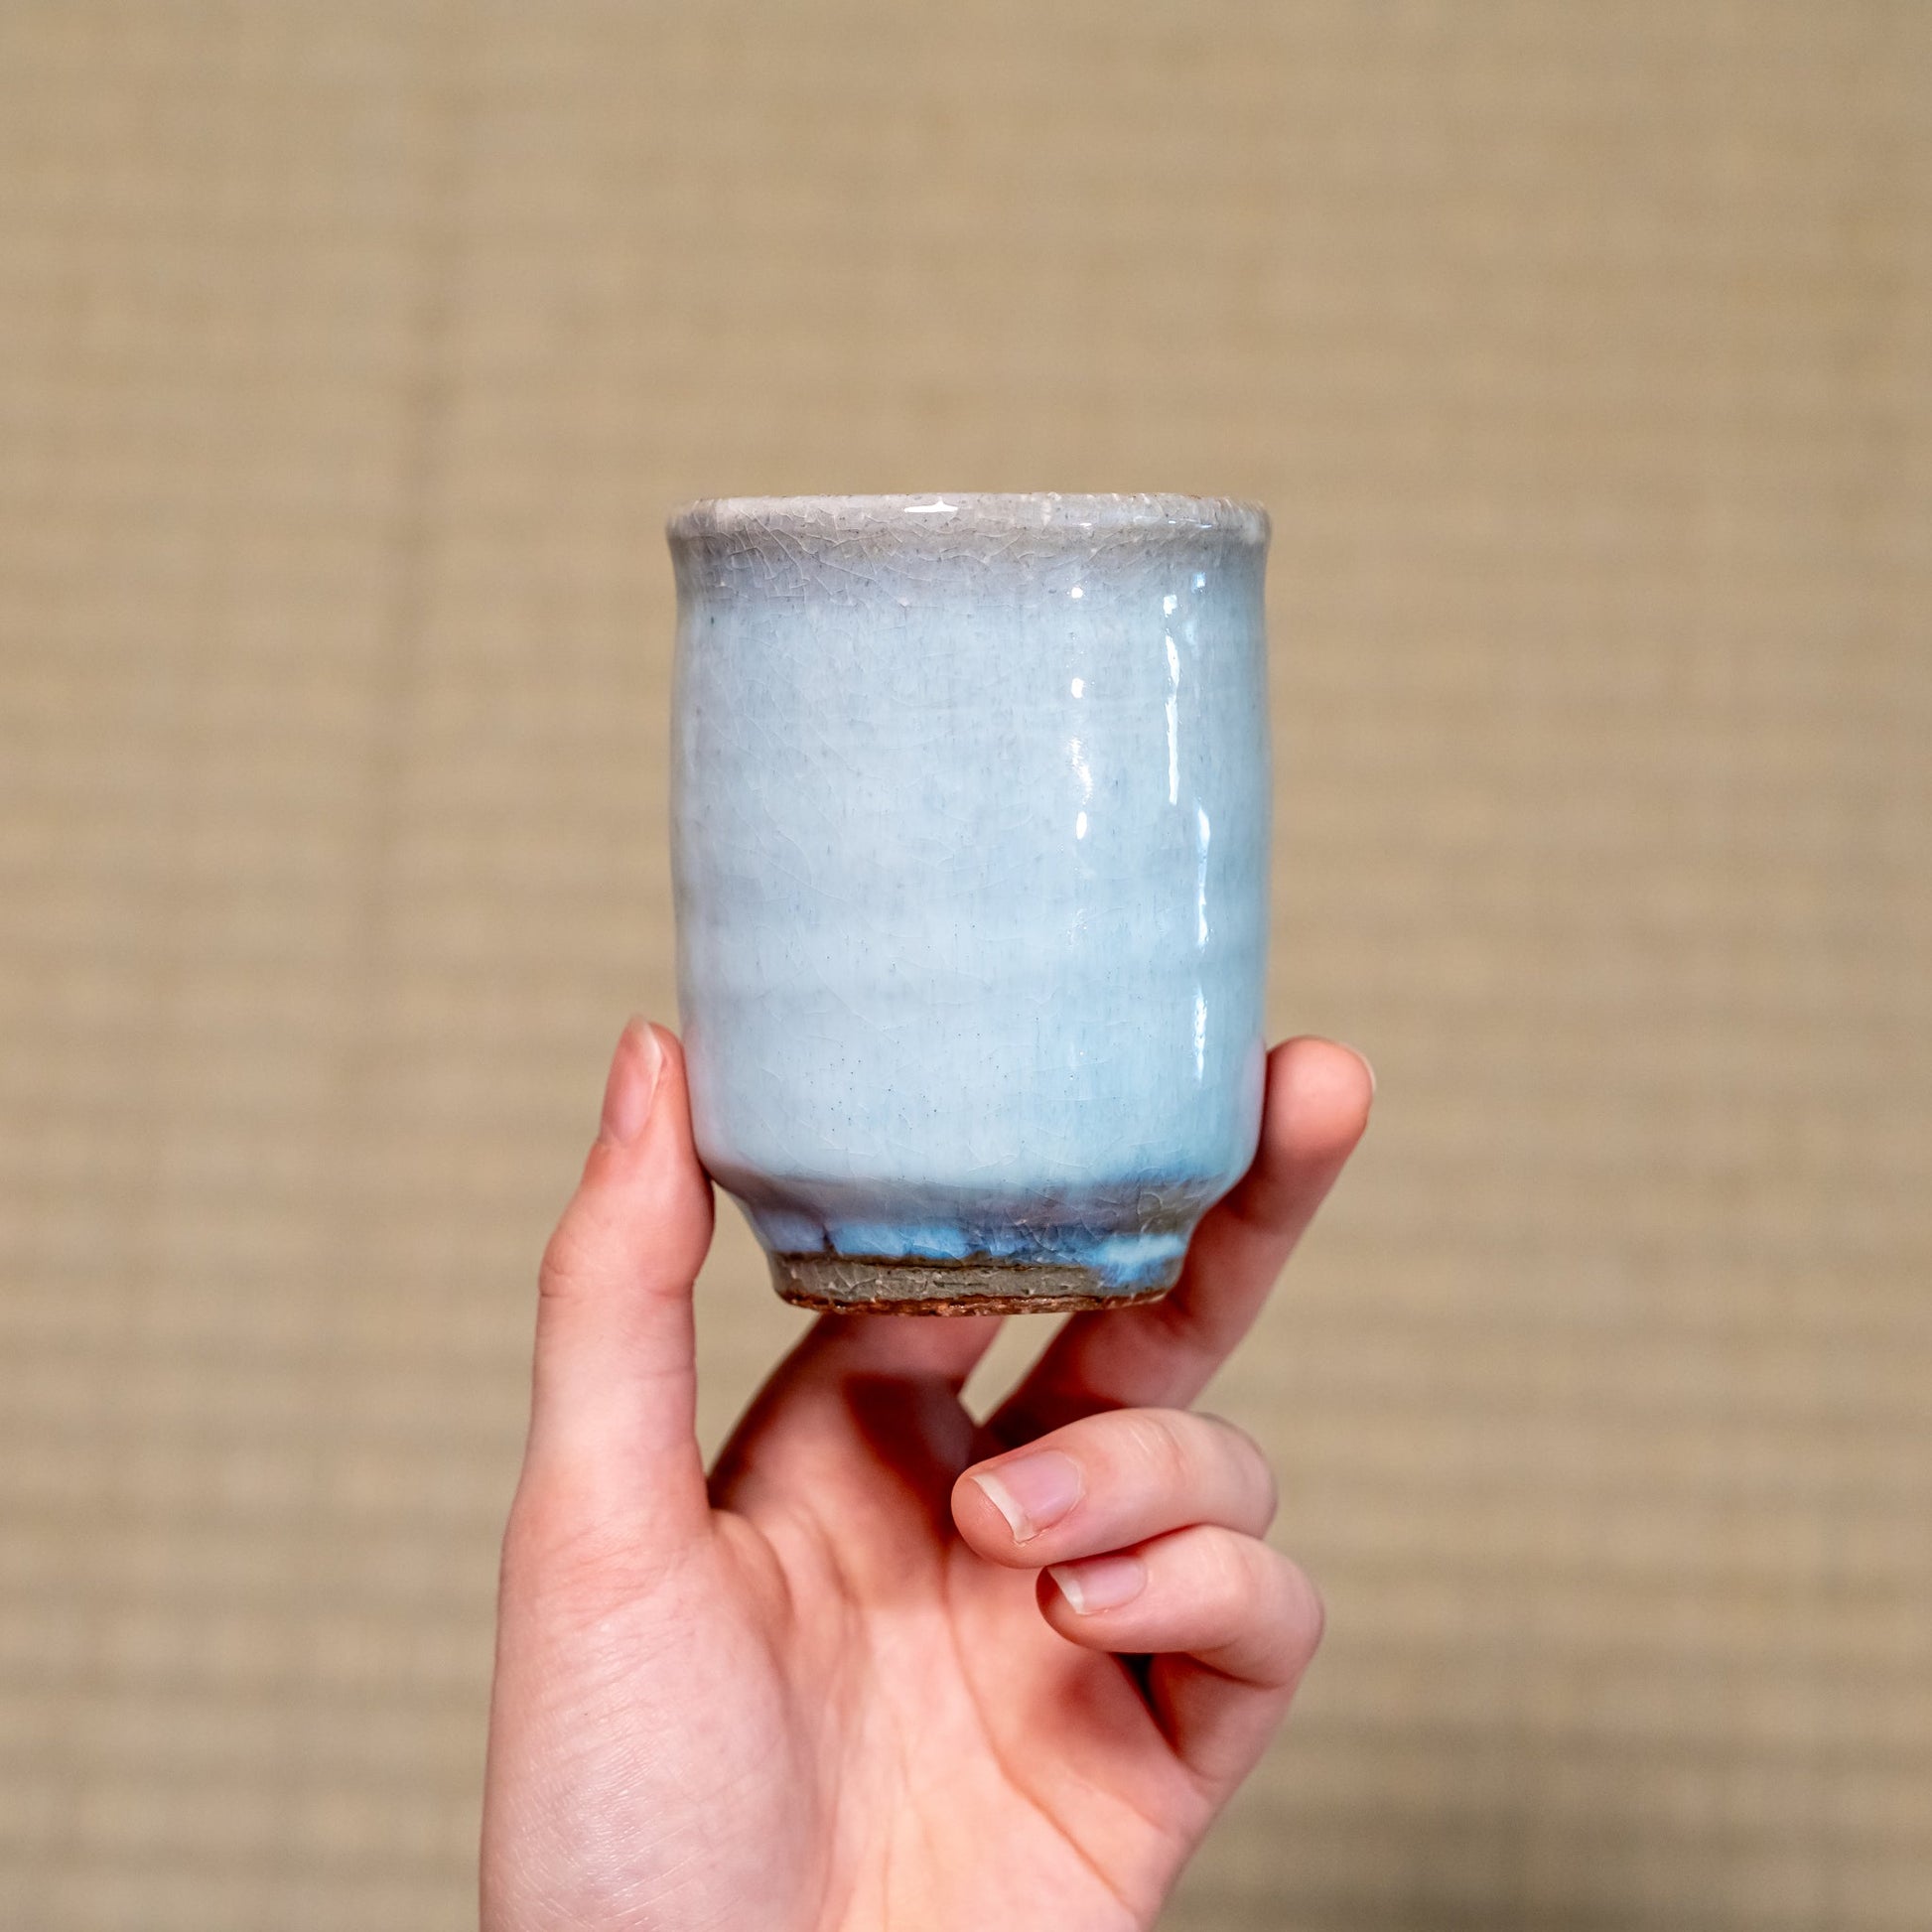 A Japanese ceramic Hagi yaki teacup held in hand